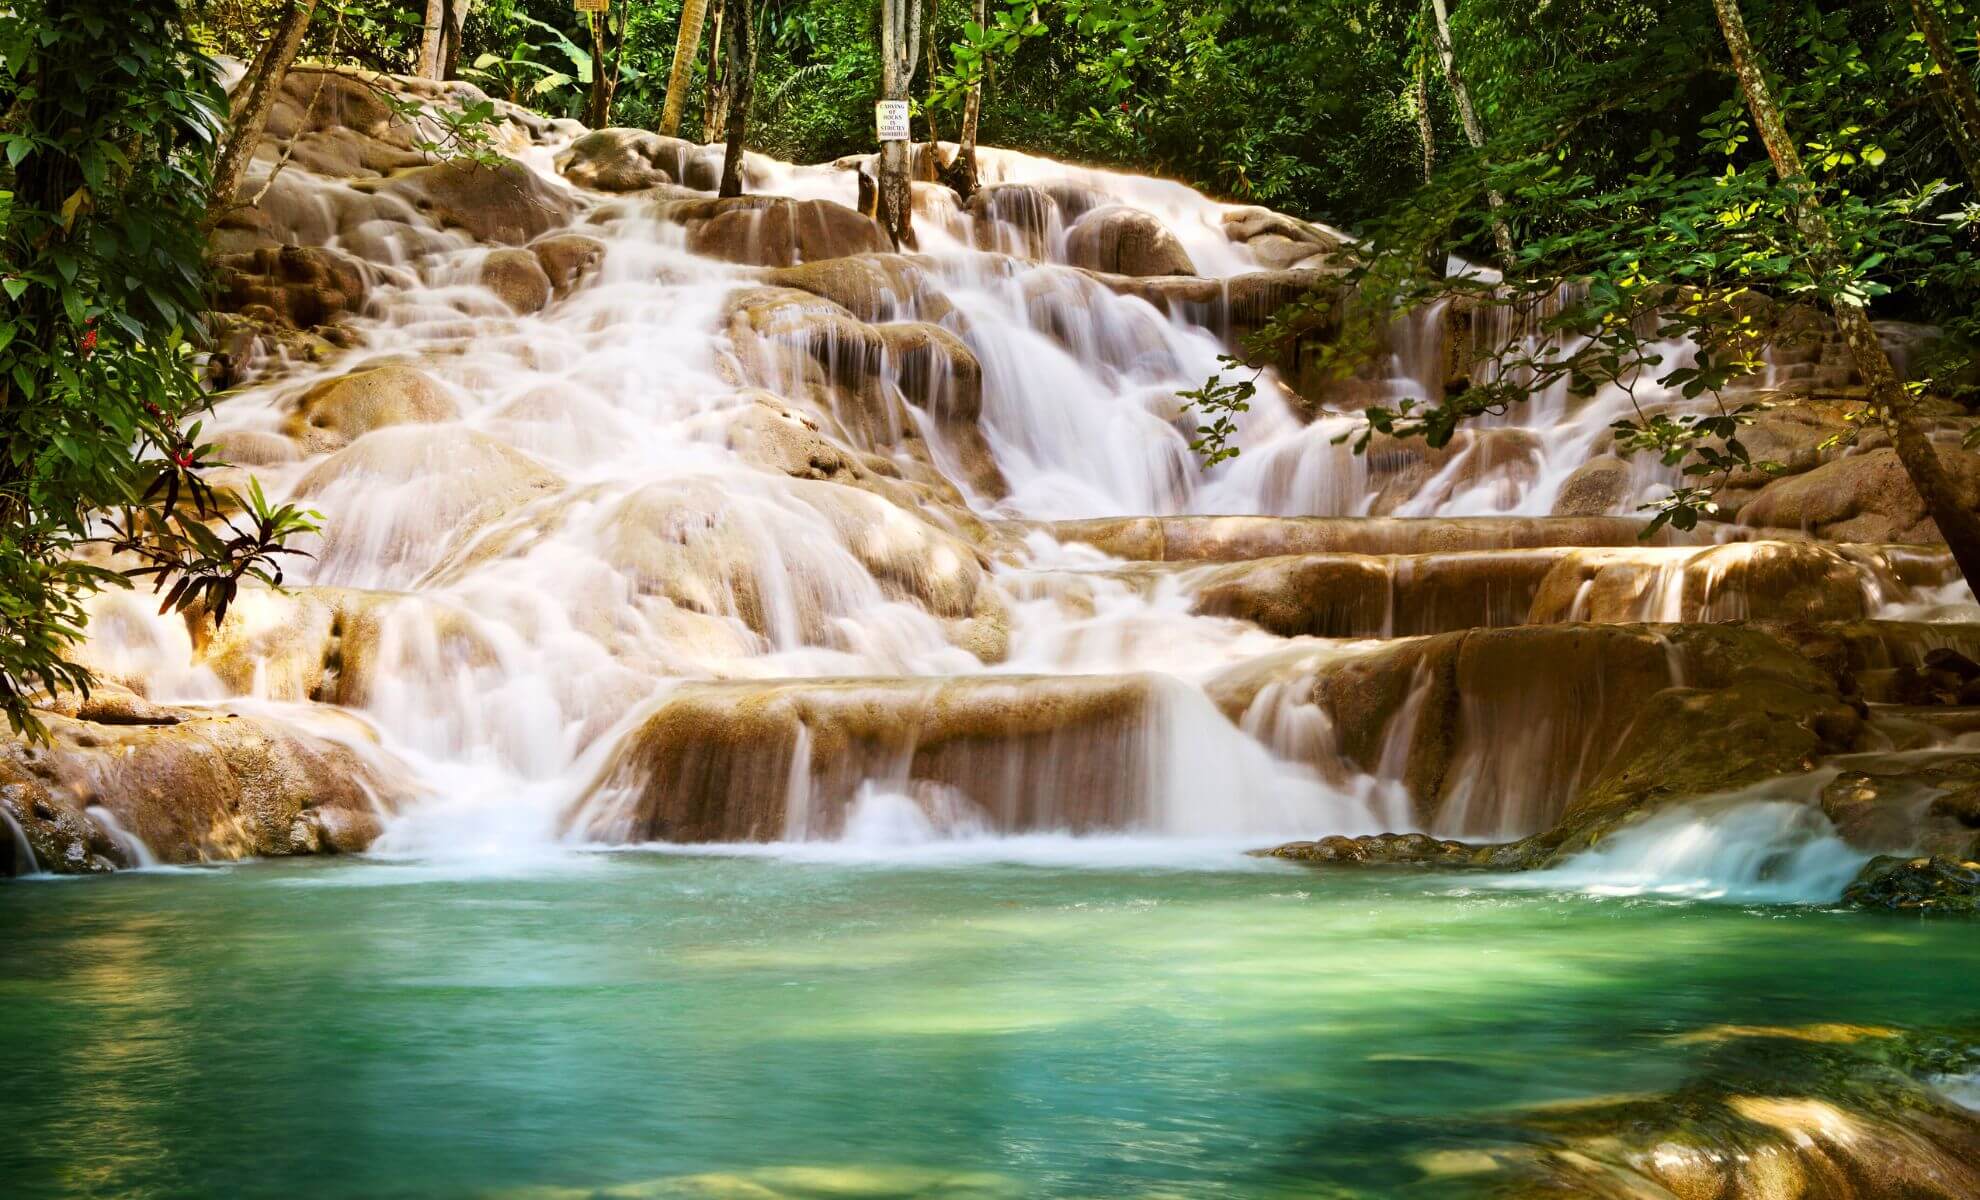 Les chutes de la Dunn’s River, Jamaïque